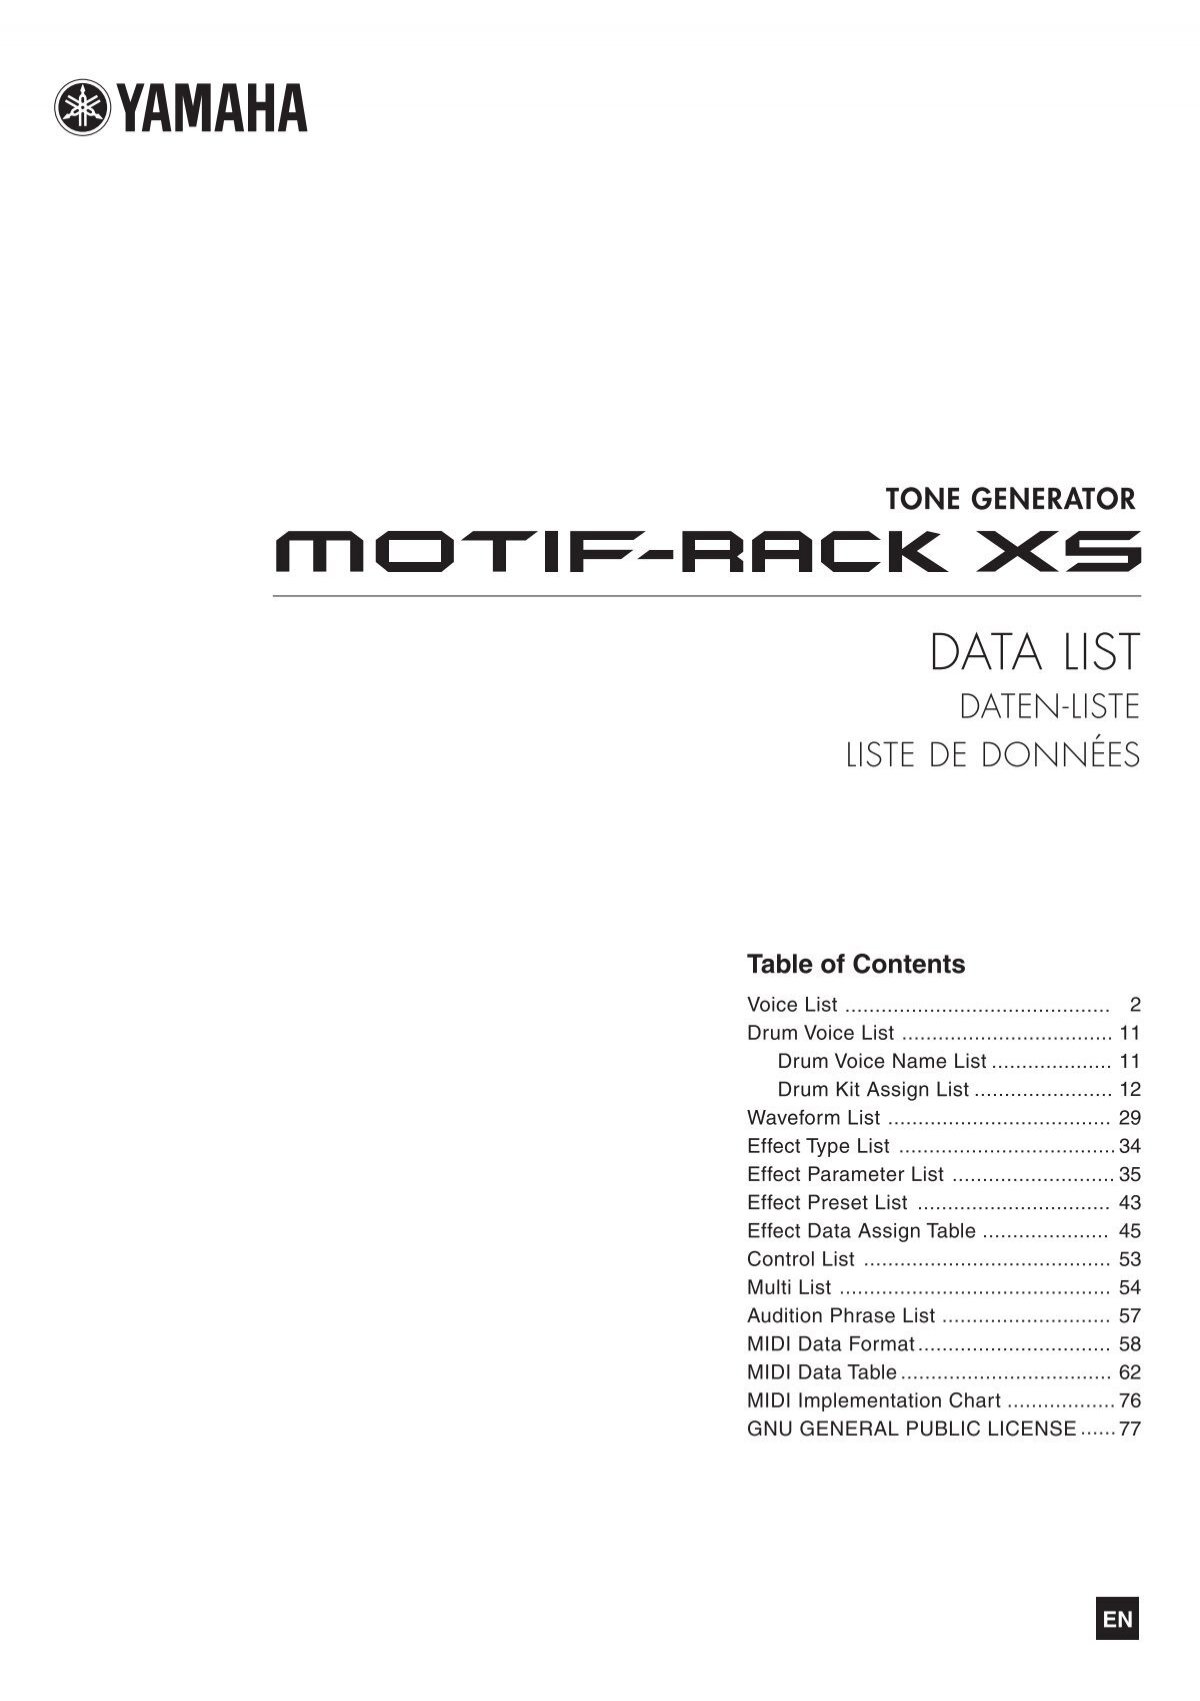 MOTIF-RACK XS Data List - Yamaha